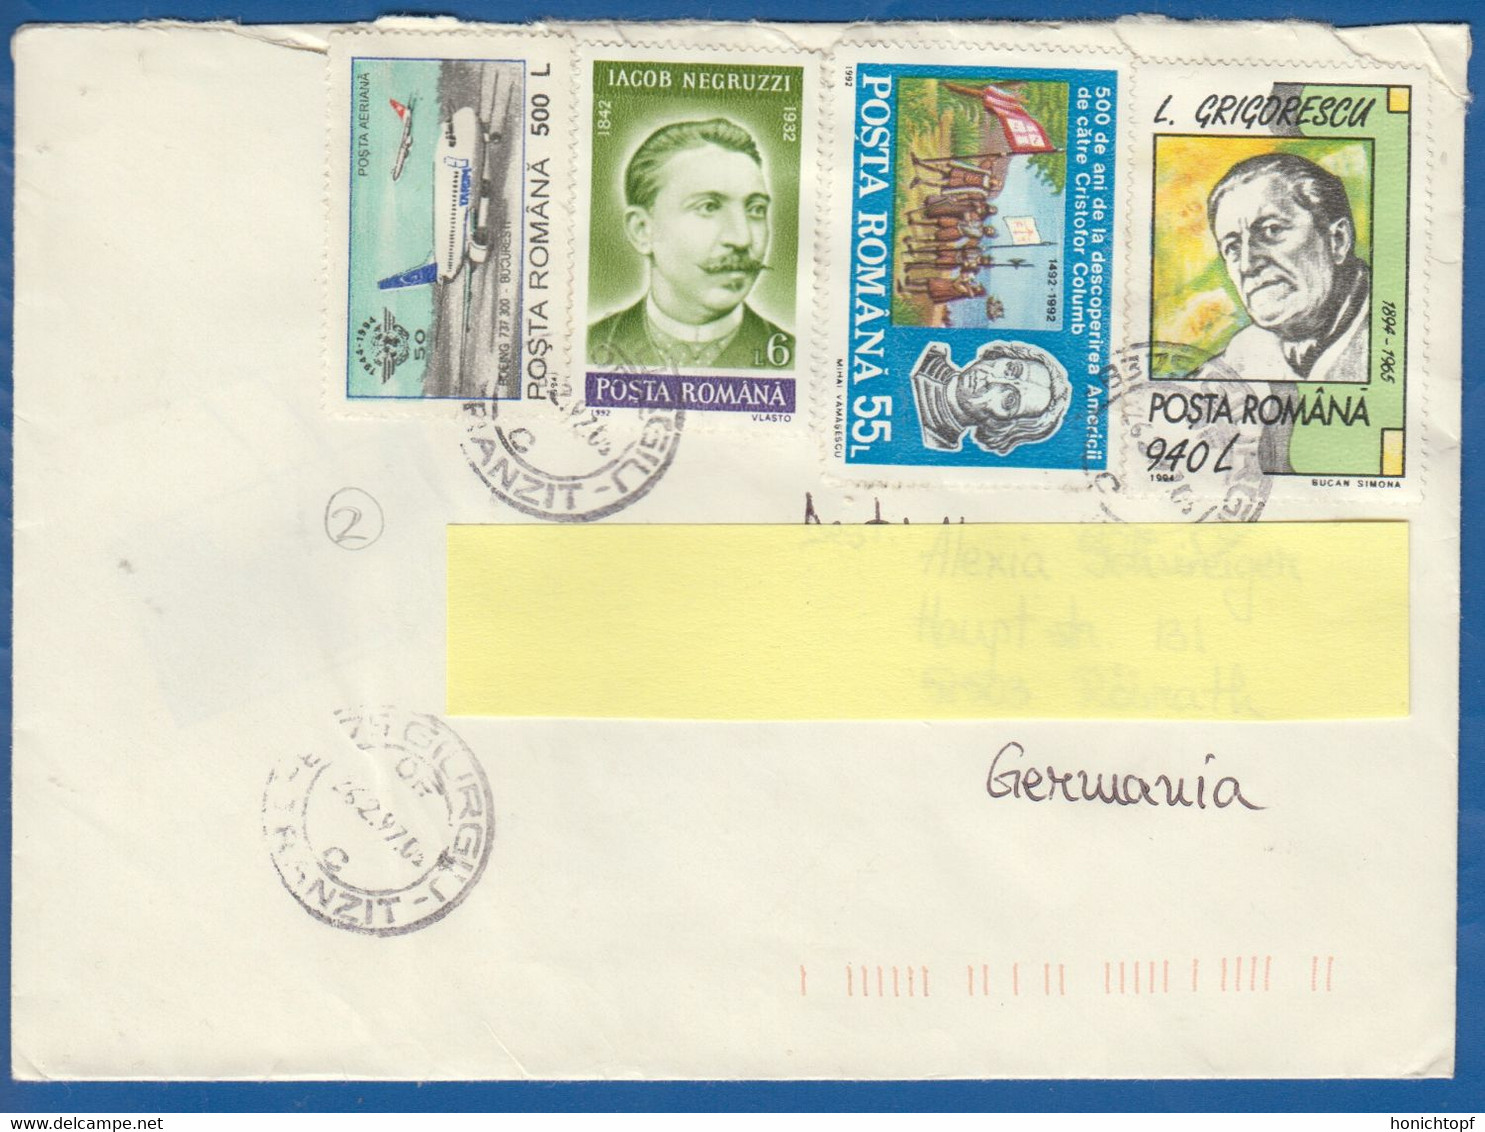 Rumänien; Brief Infla; 1997; Giurgiu; Romania - Briefe U. Dokumente